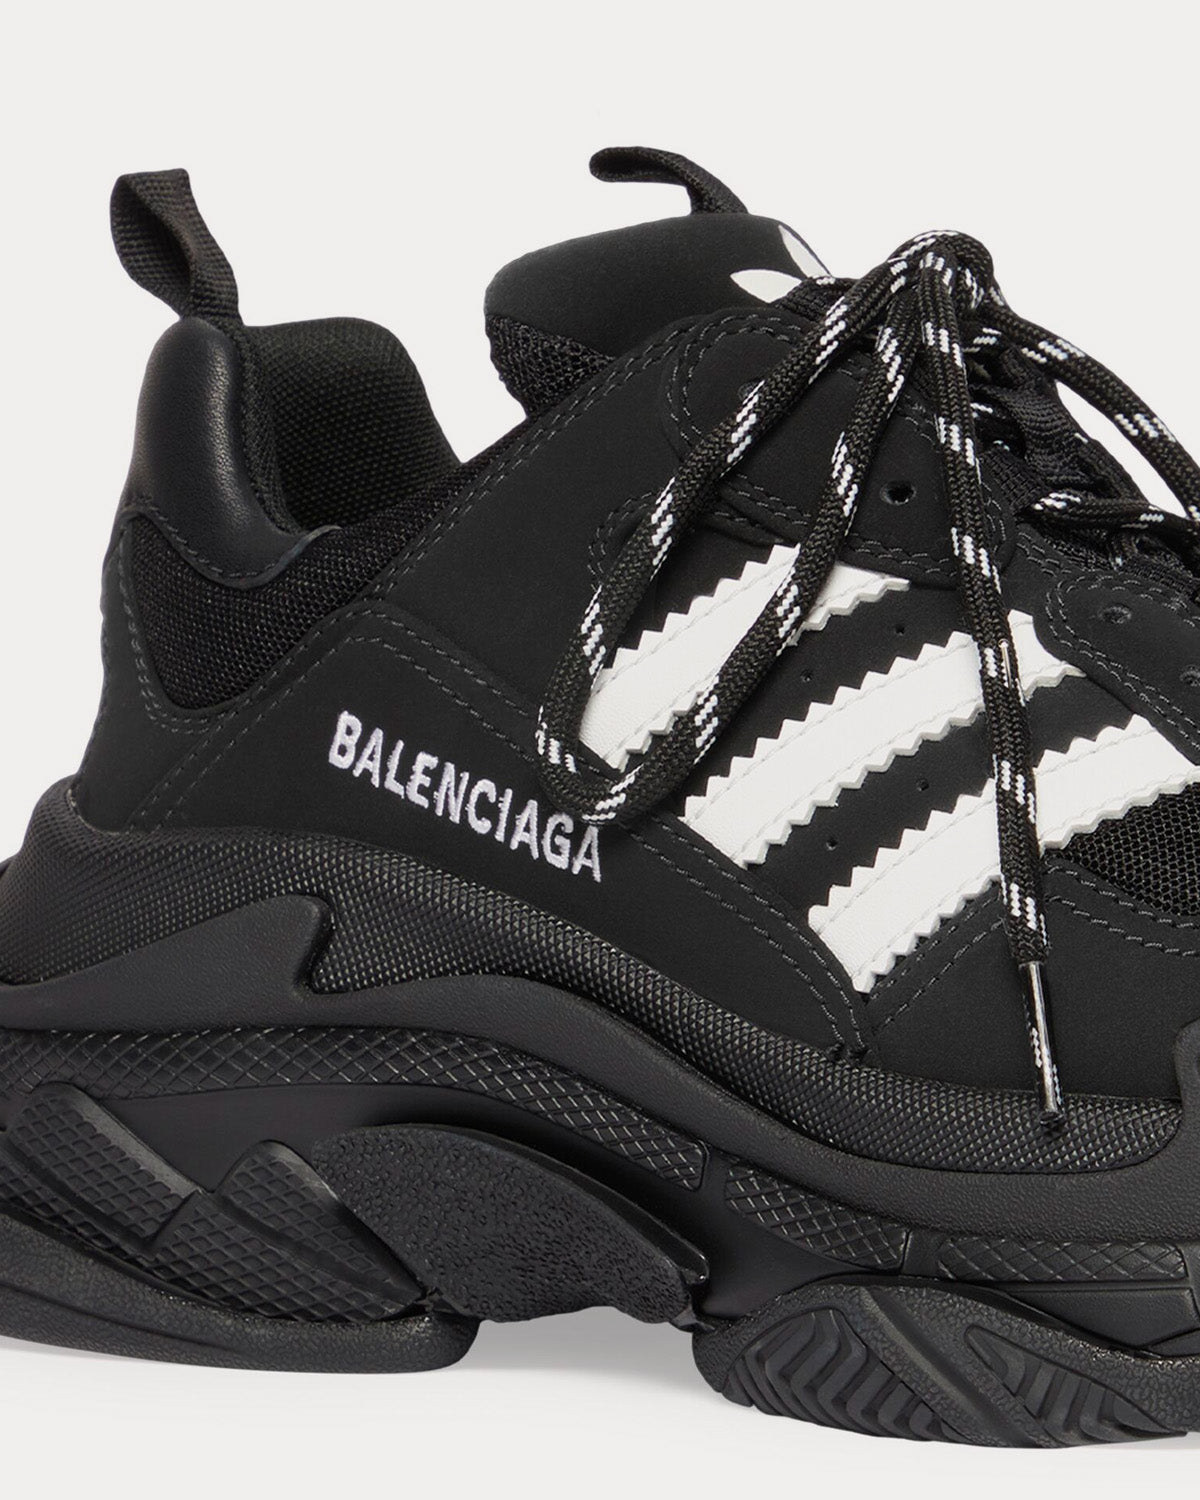 Balenciaga x Adidas - Triple S Black / White Low Top Sneakers